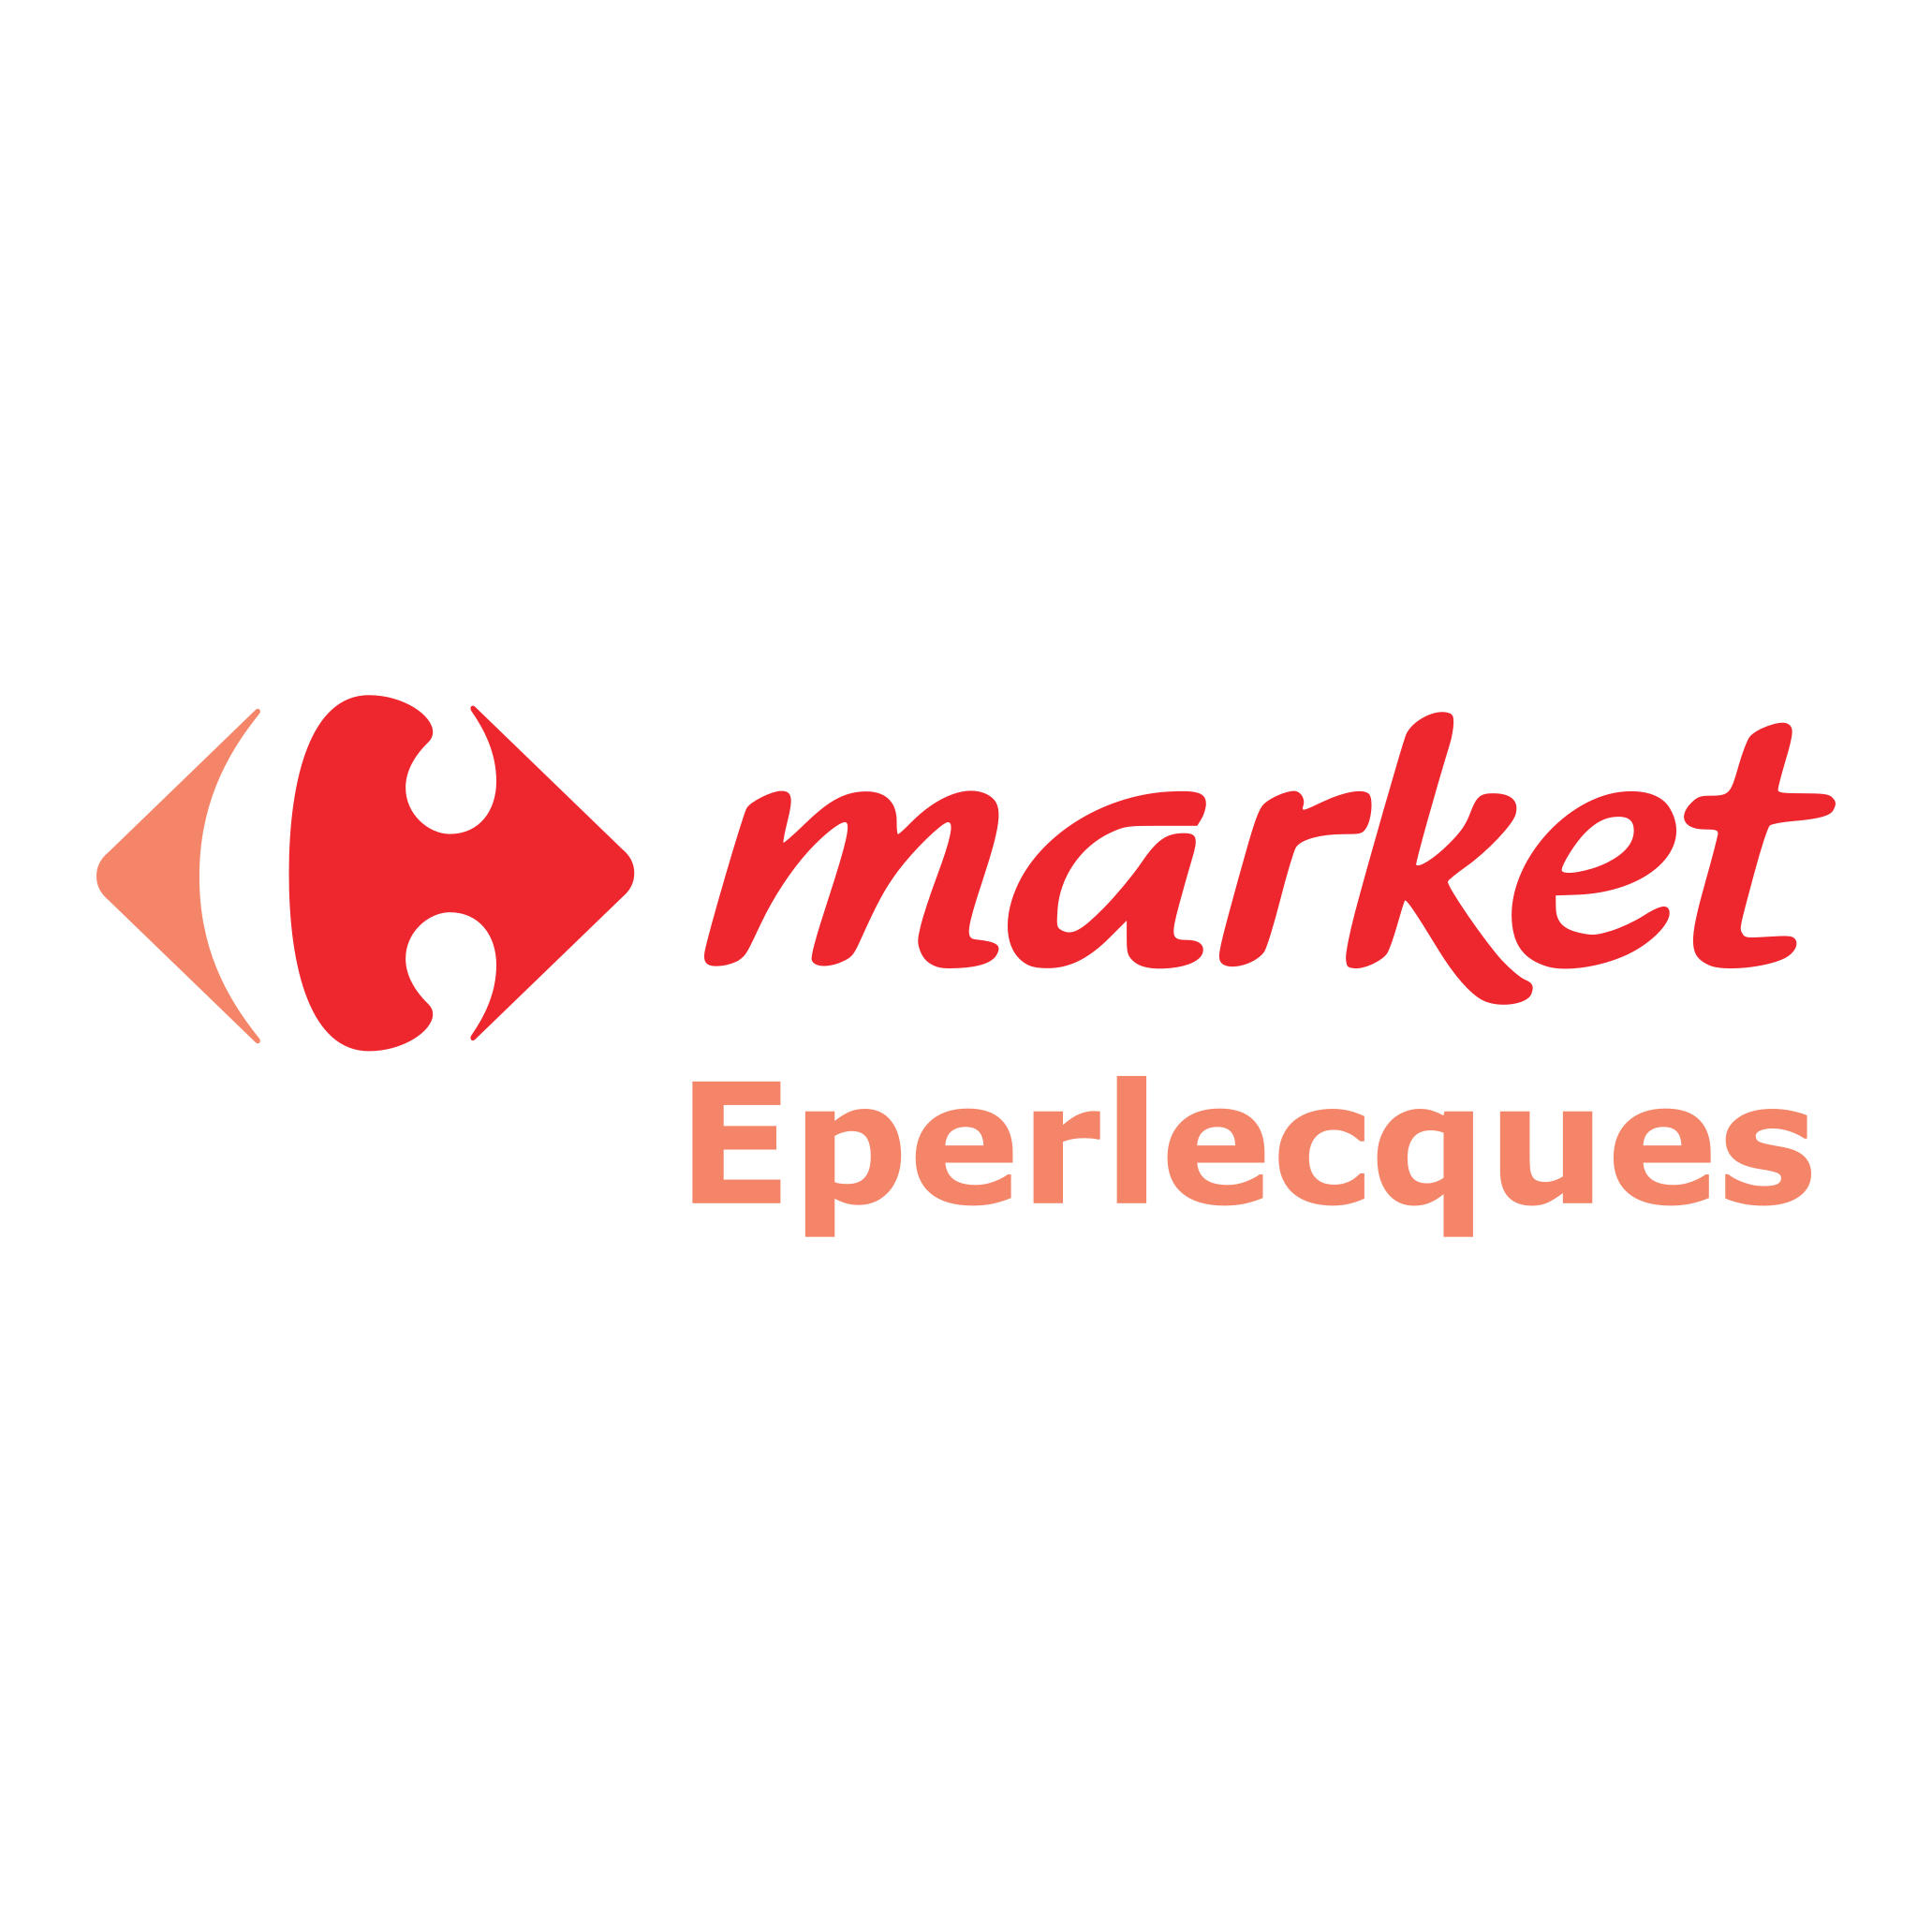 Karaté Eperlecques : En face de carrefour Market Eperlecques